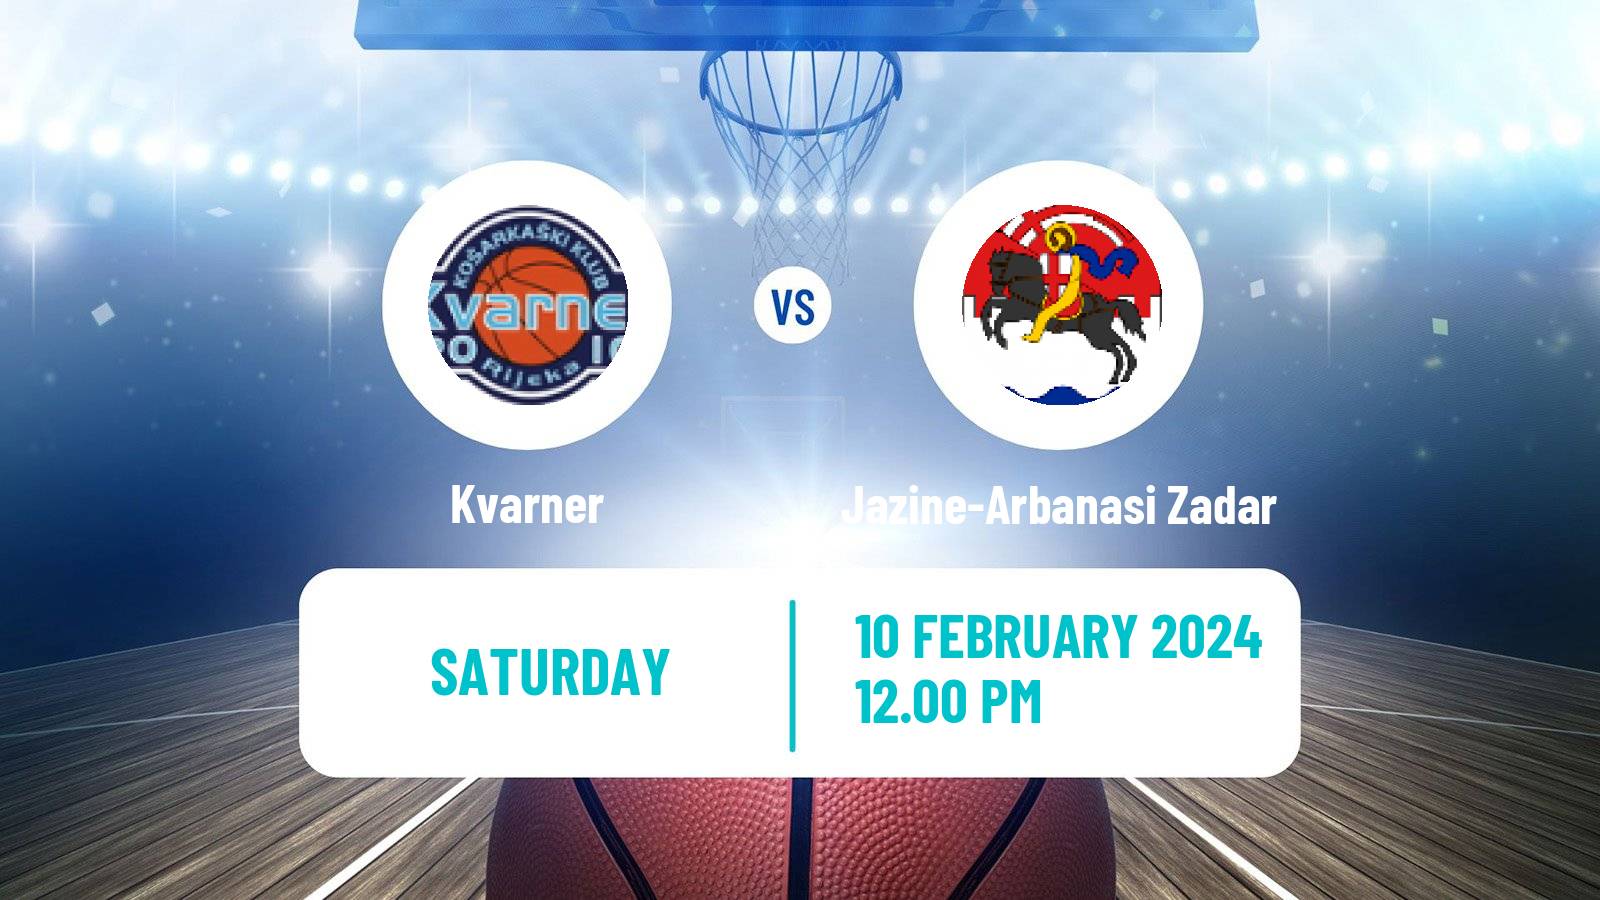 Basketball Croatian Prva Liga Basketball Kvarner - Jazine-Arbanasi Zadar